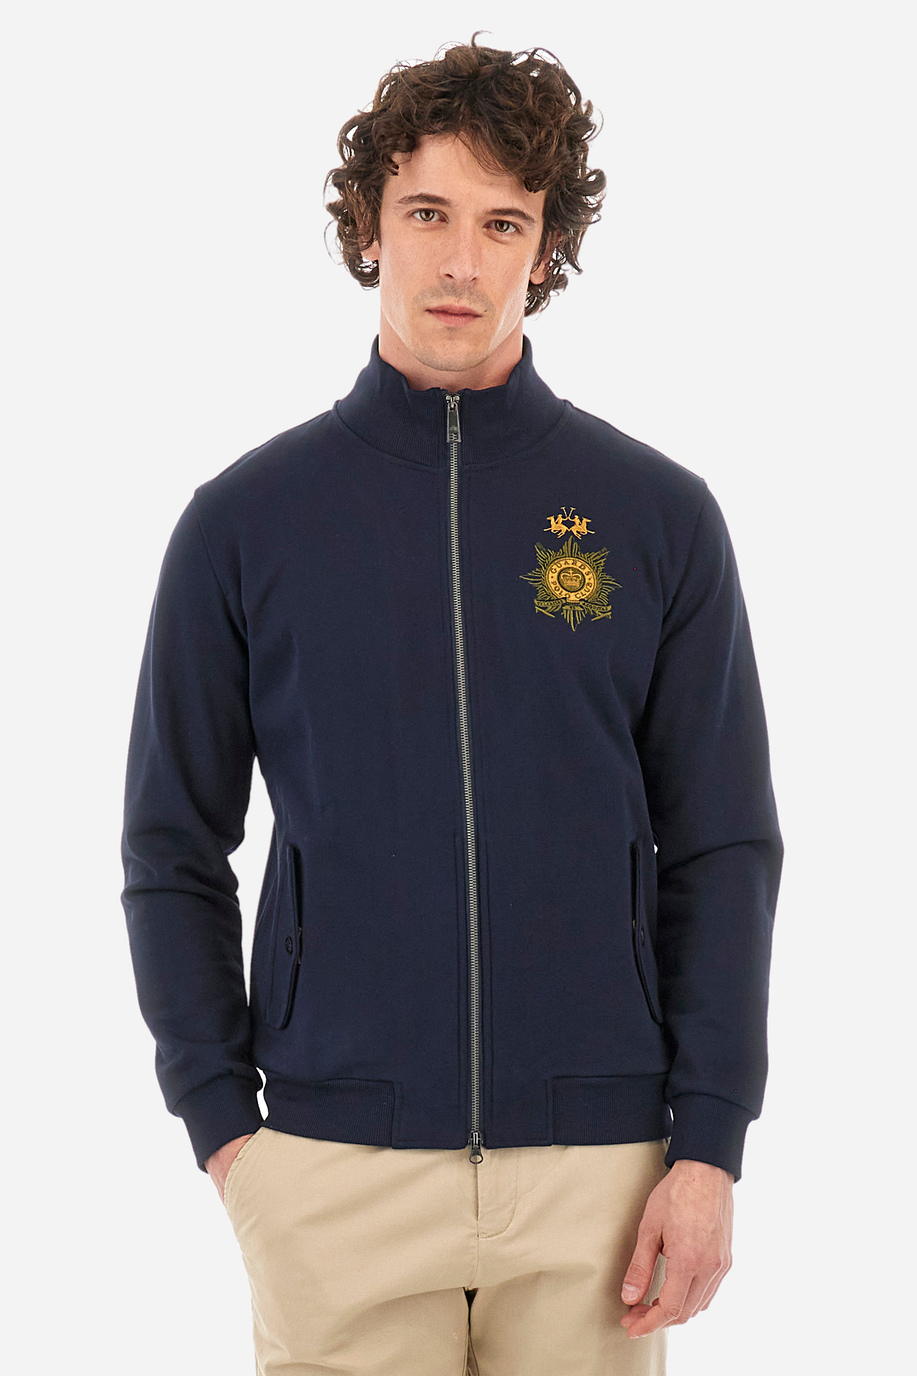 Men's regular fit Guards sweatshirt - Yanni - Guards - England | La Martina - Official Online Shop